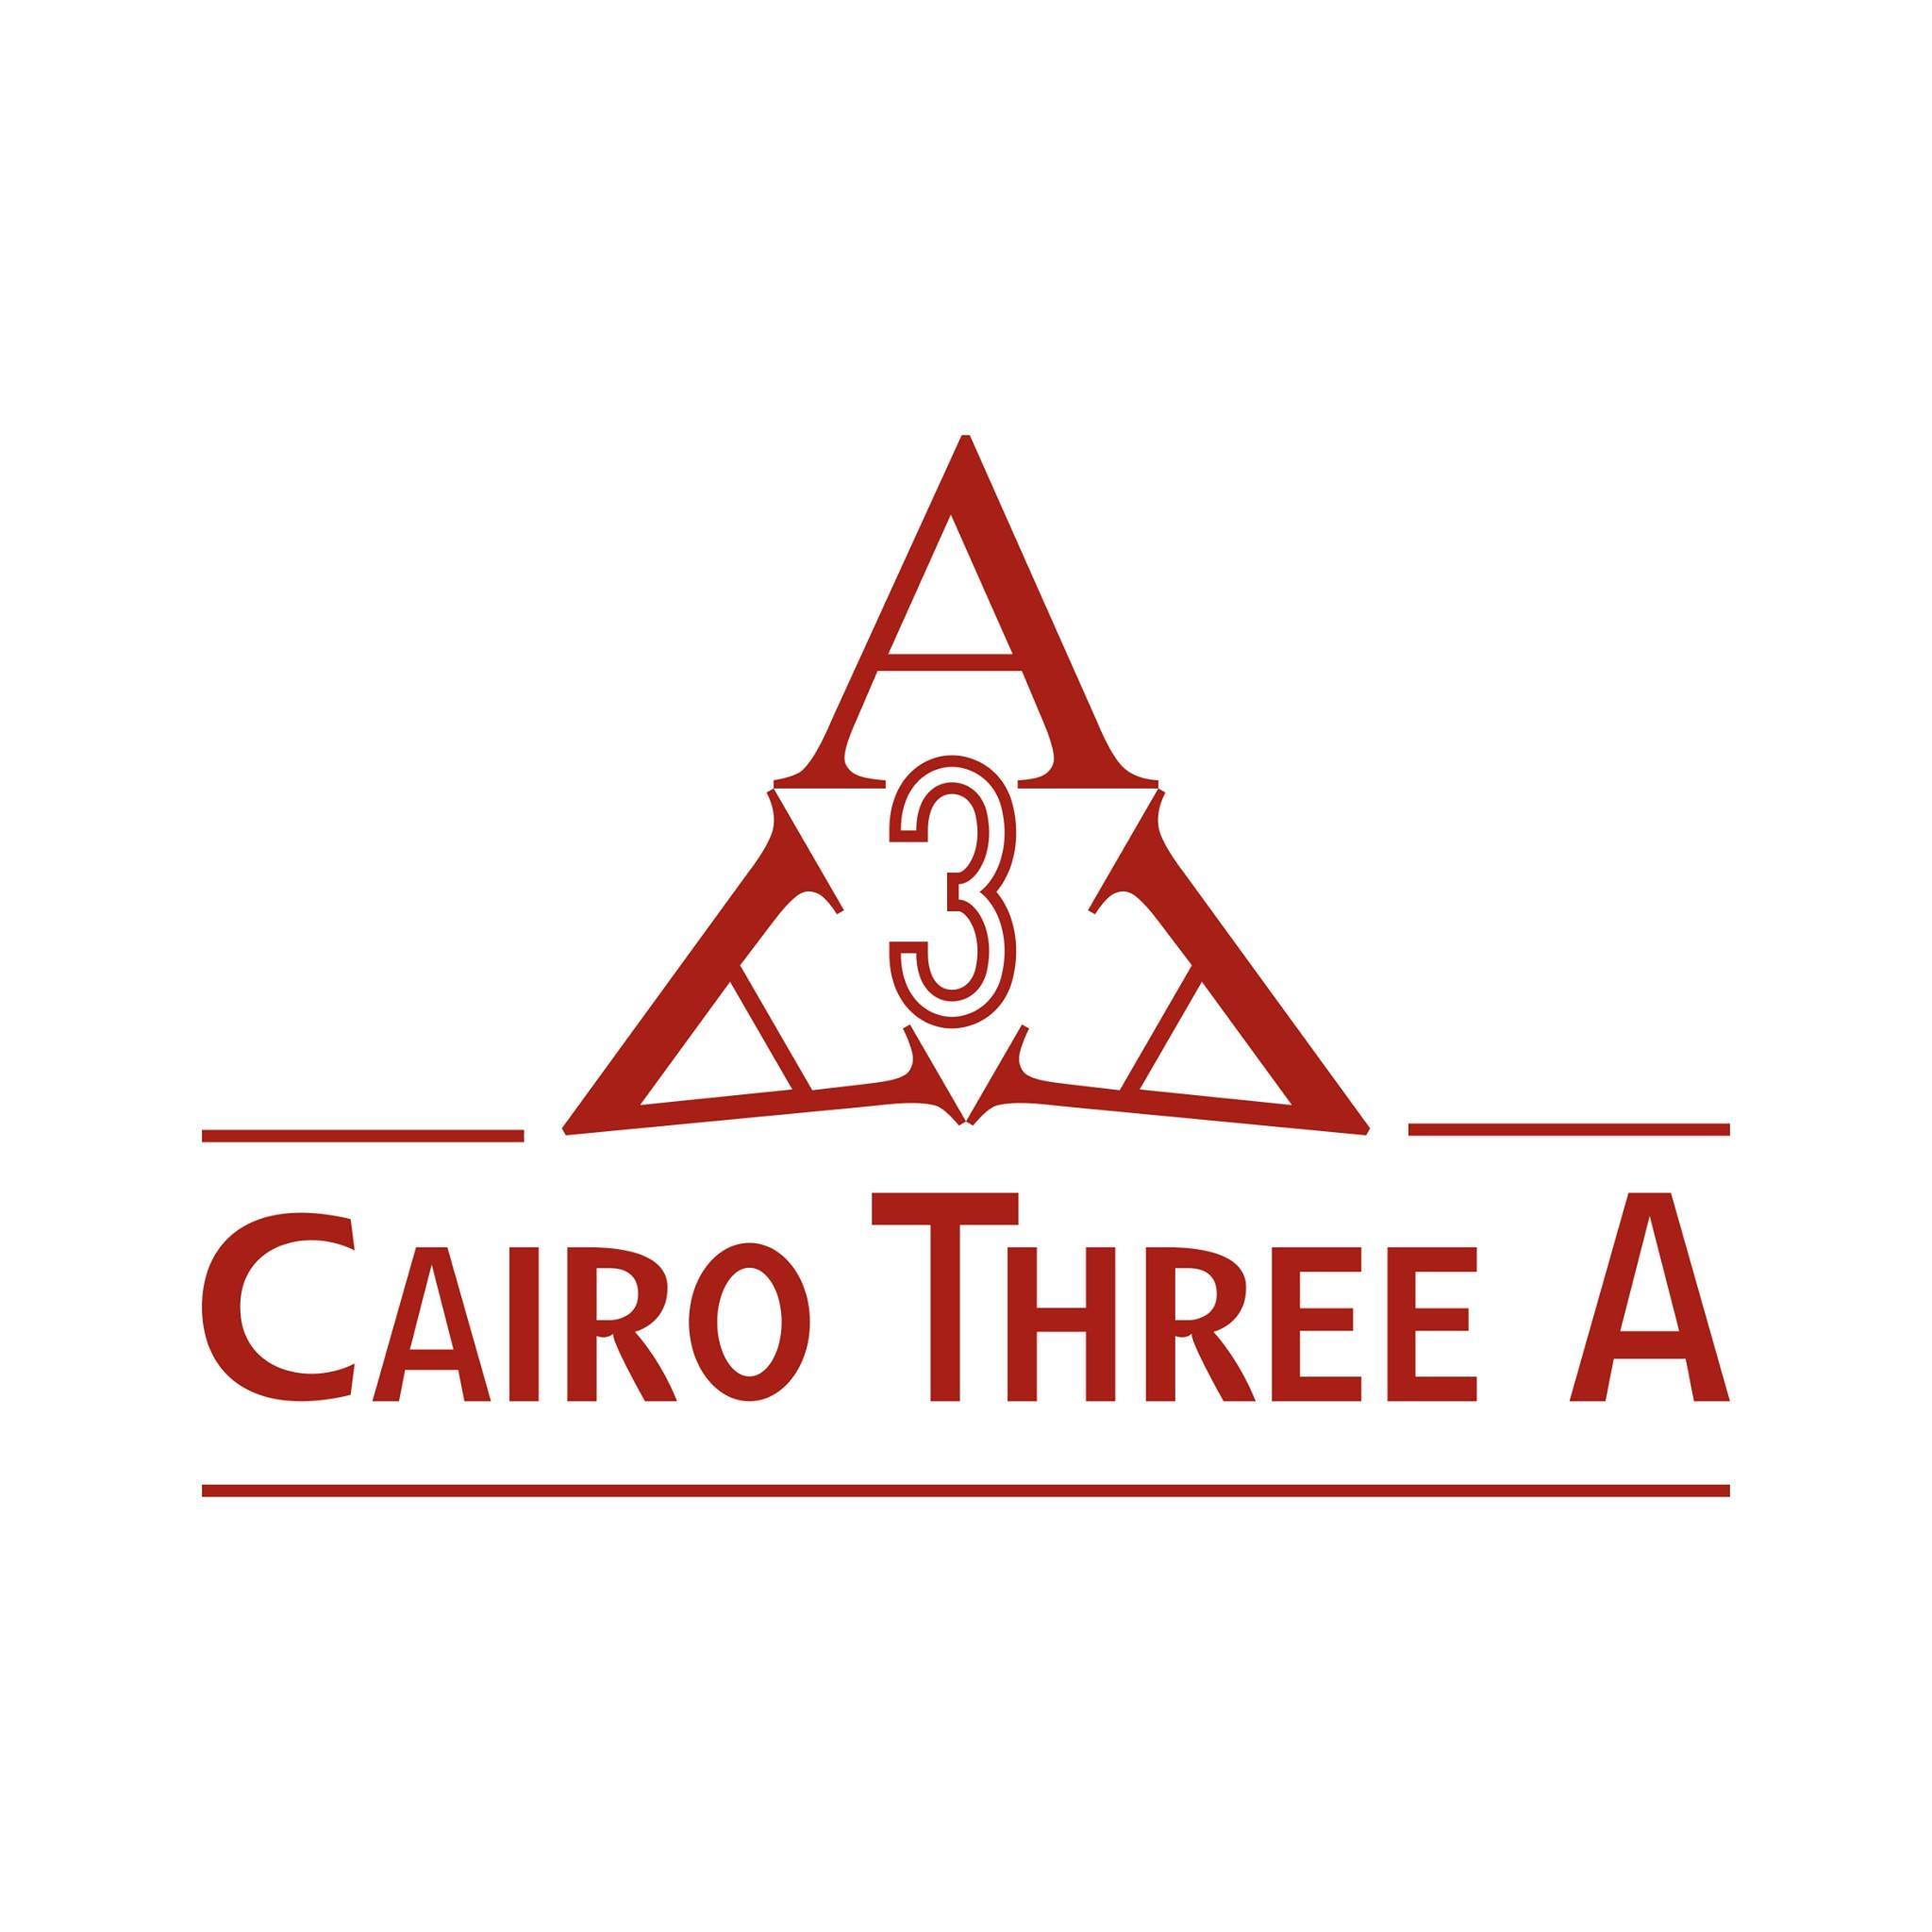 Cairo Three A Group subsidiaries